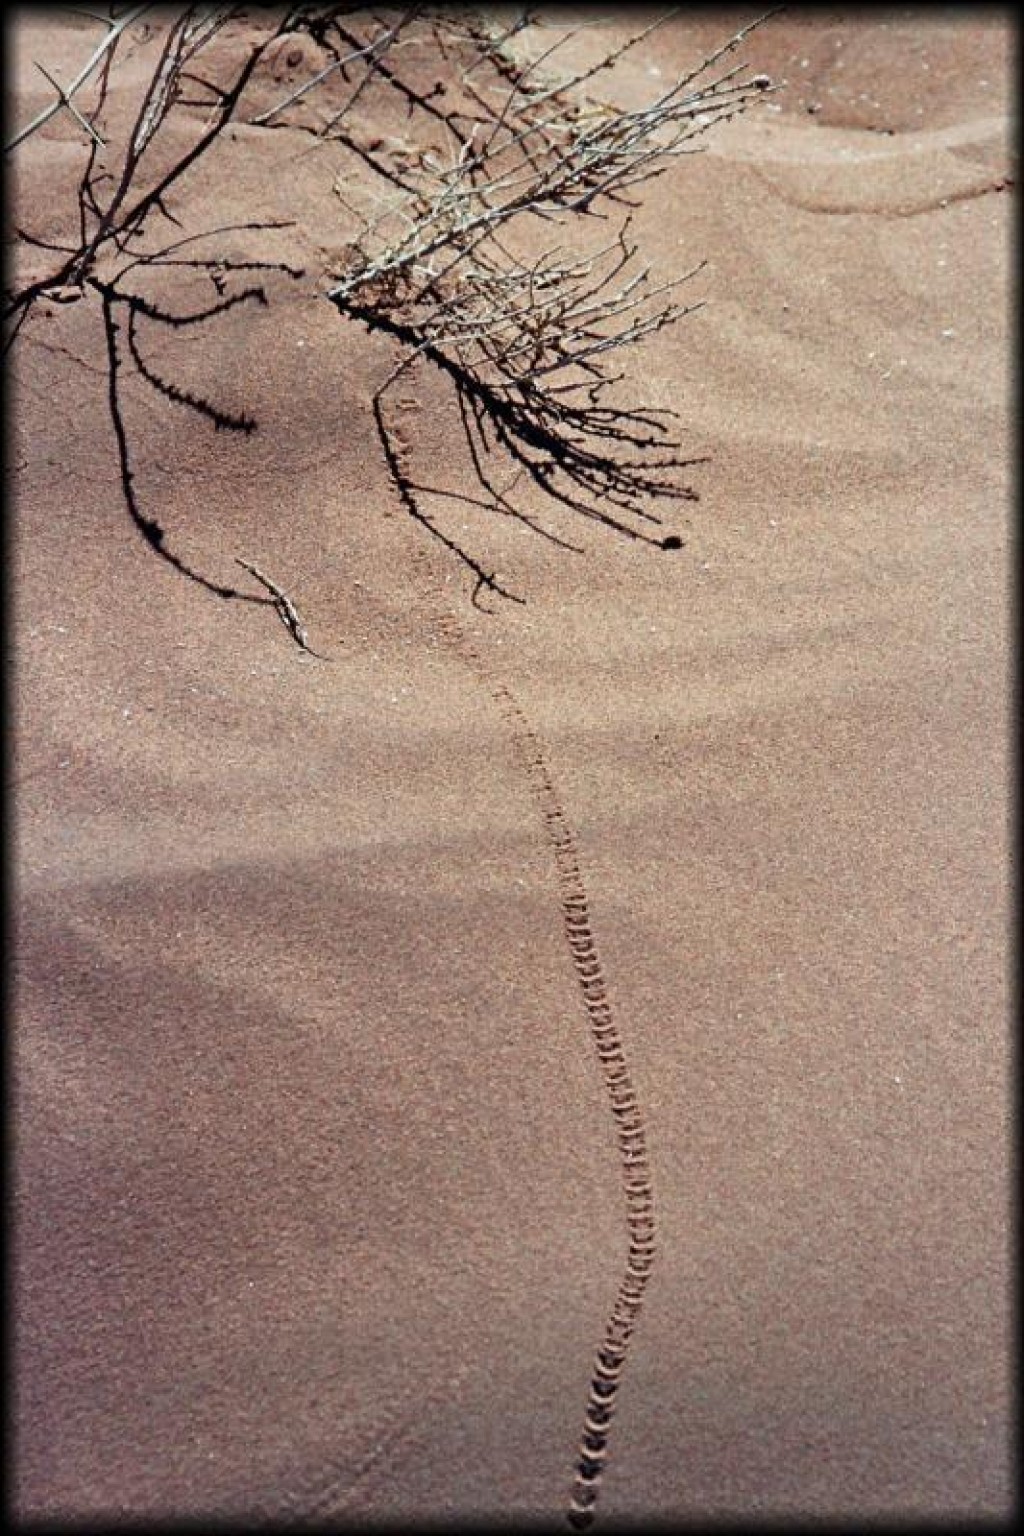 Dung beetle tracks.